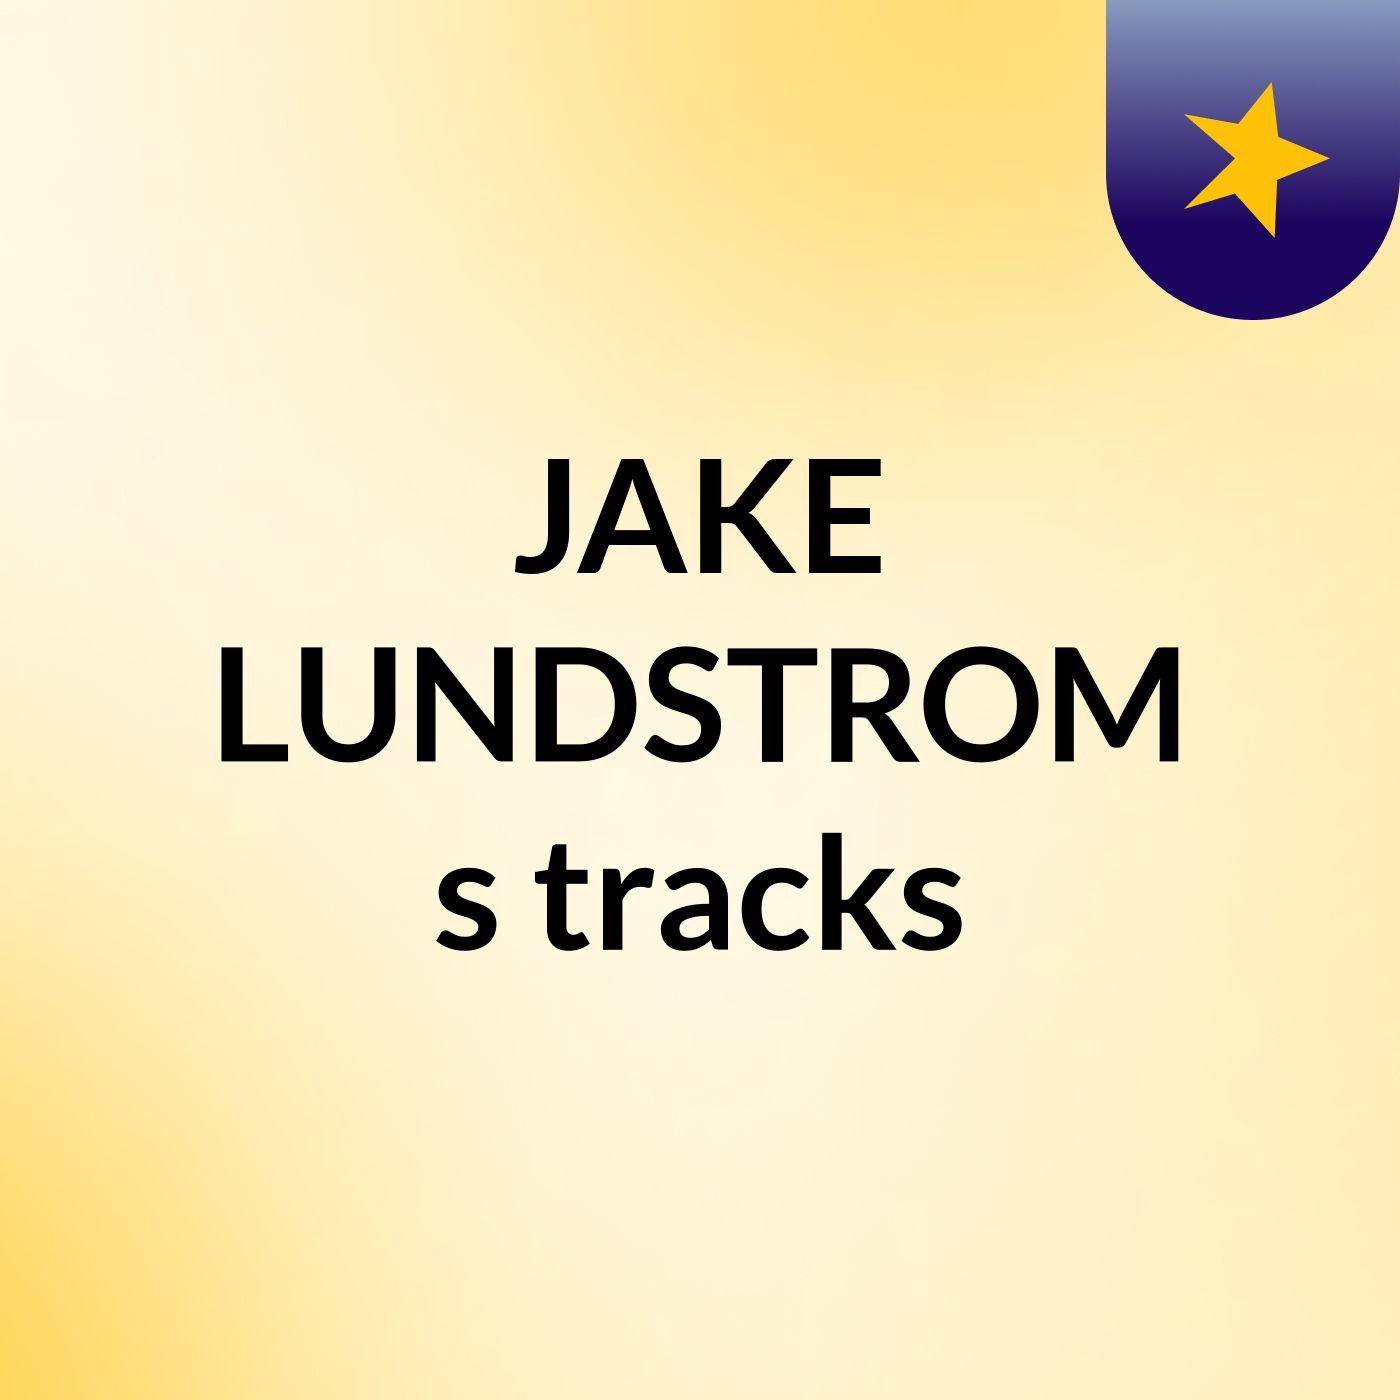 JAKE LUNDSTROM's tracks